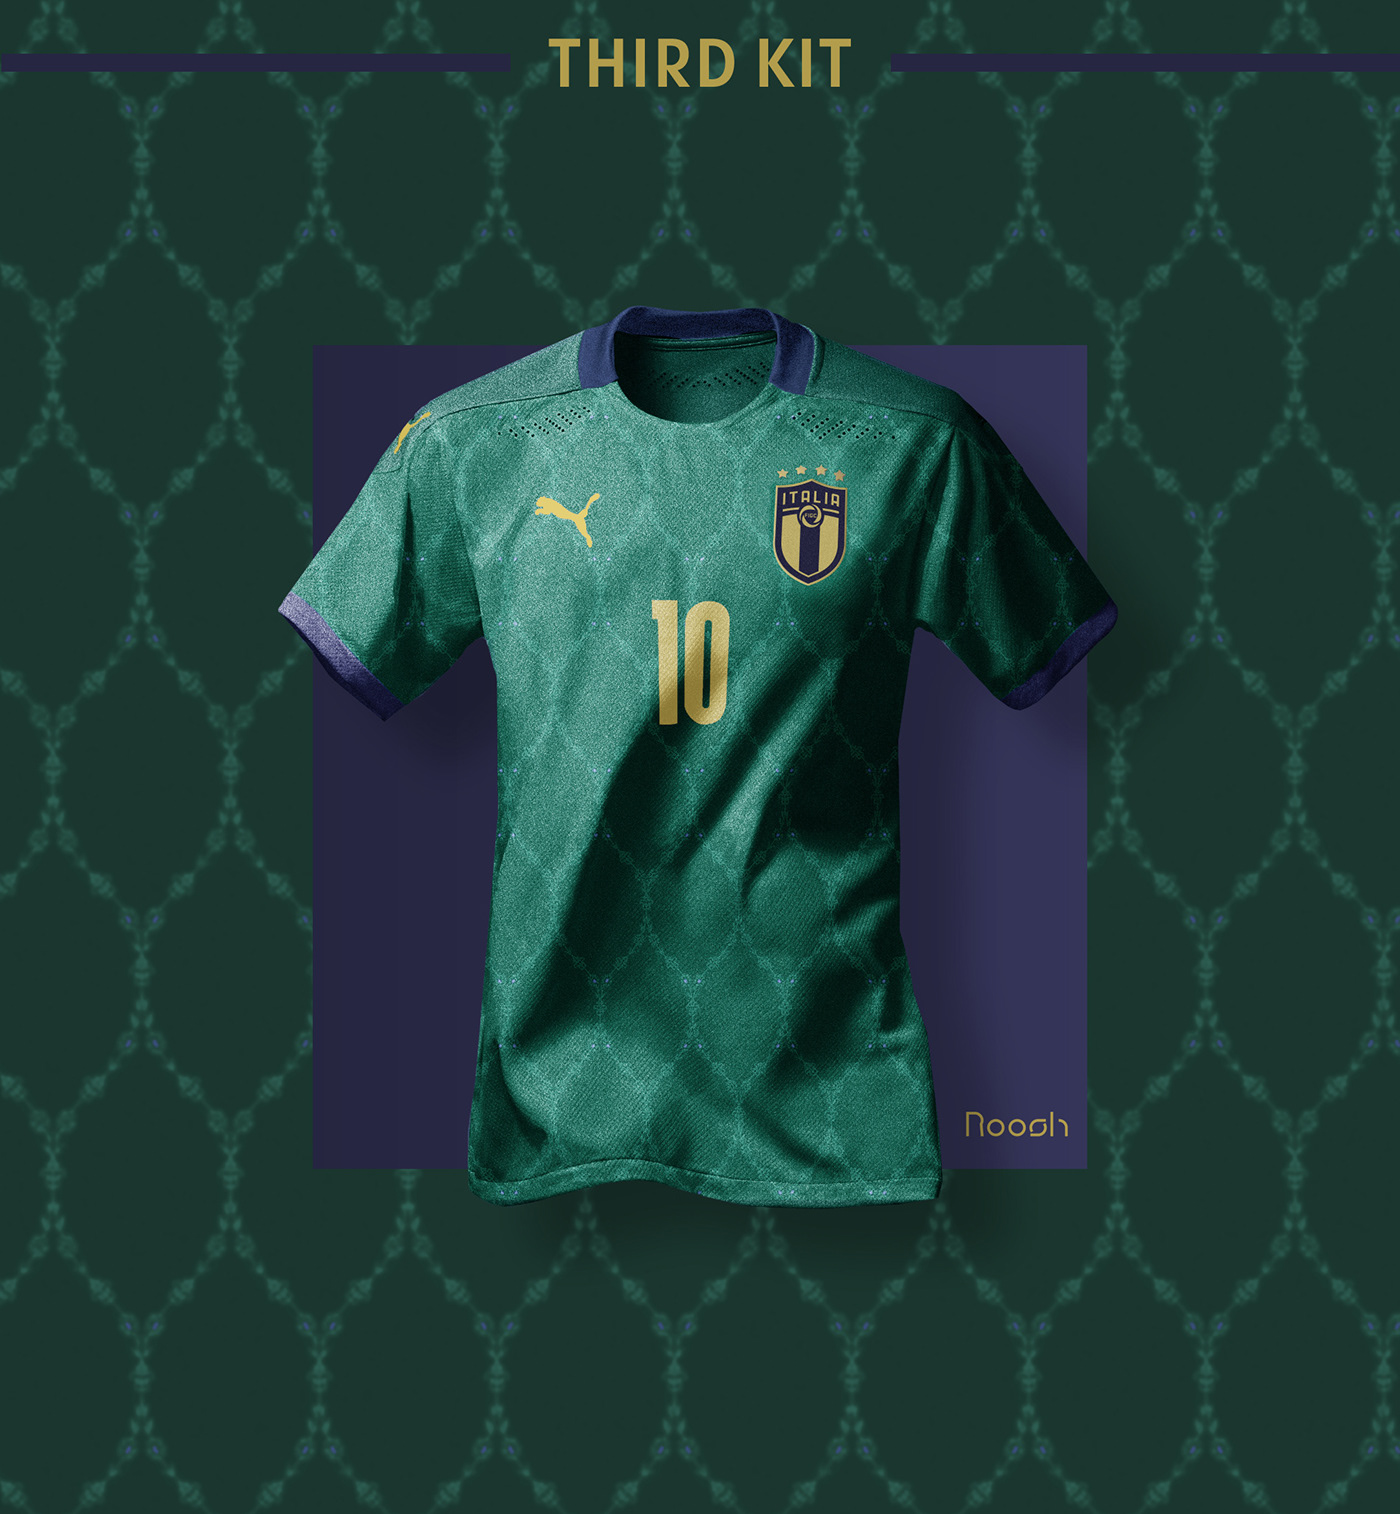 Italy puma Football kit Soccer Kit design concept sport brands Fashion  football